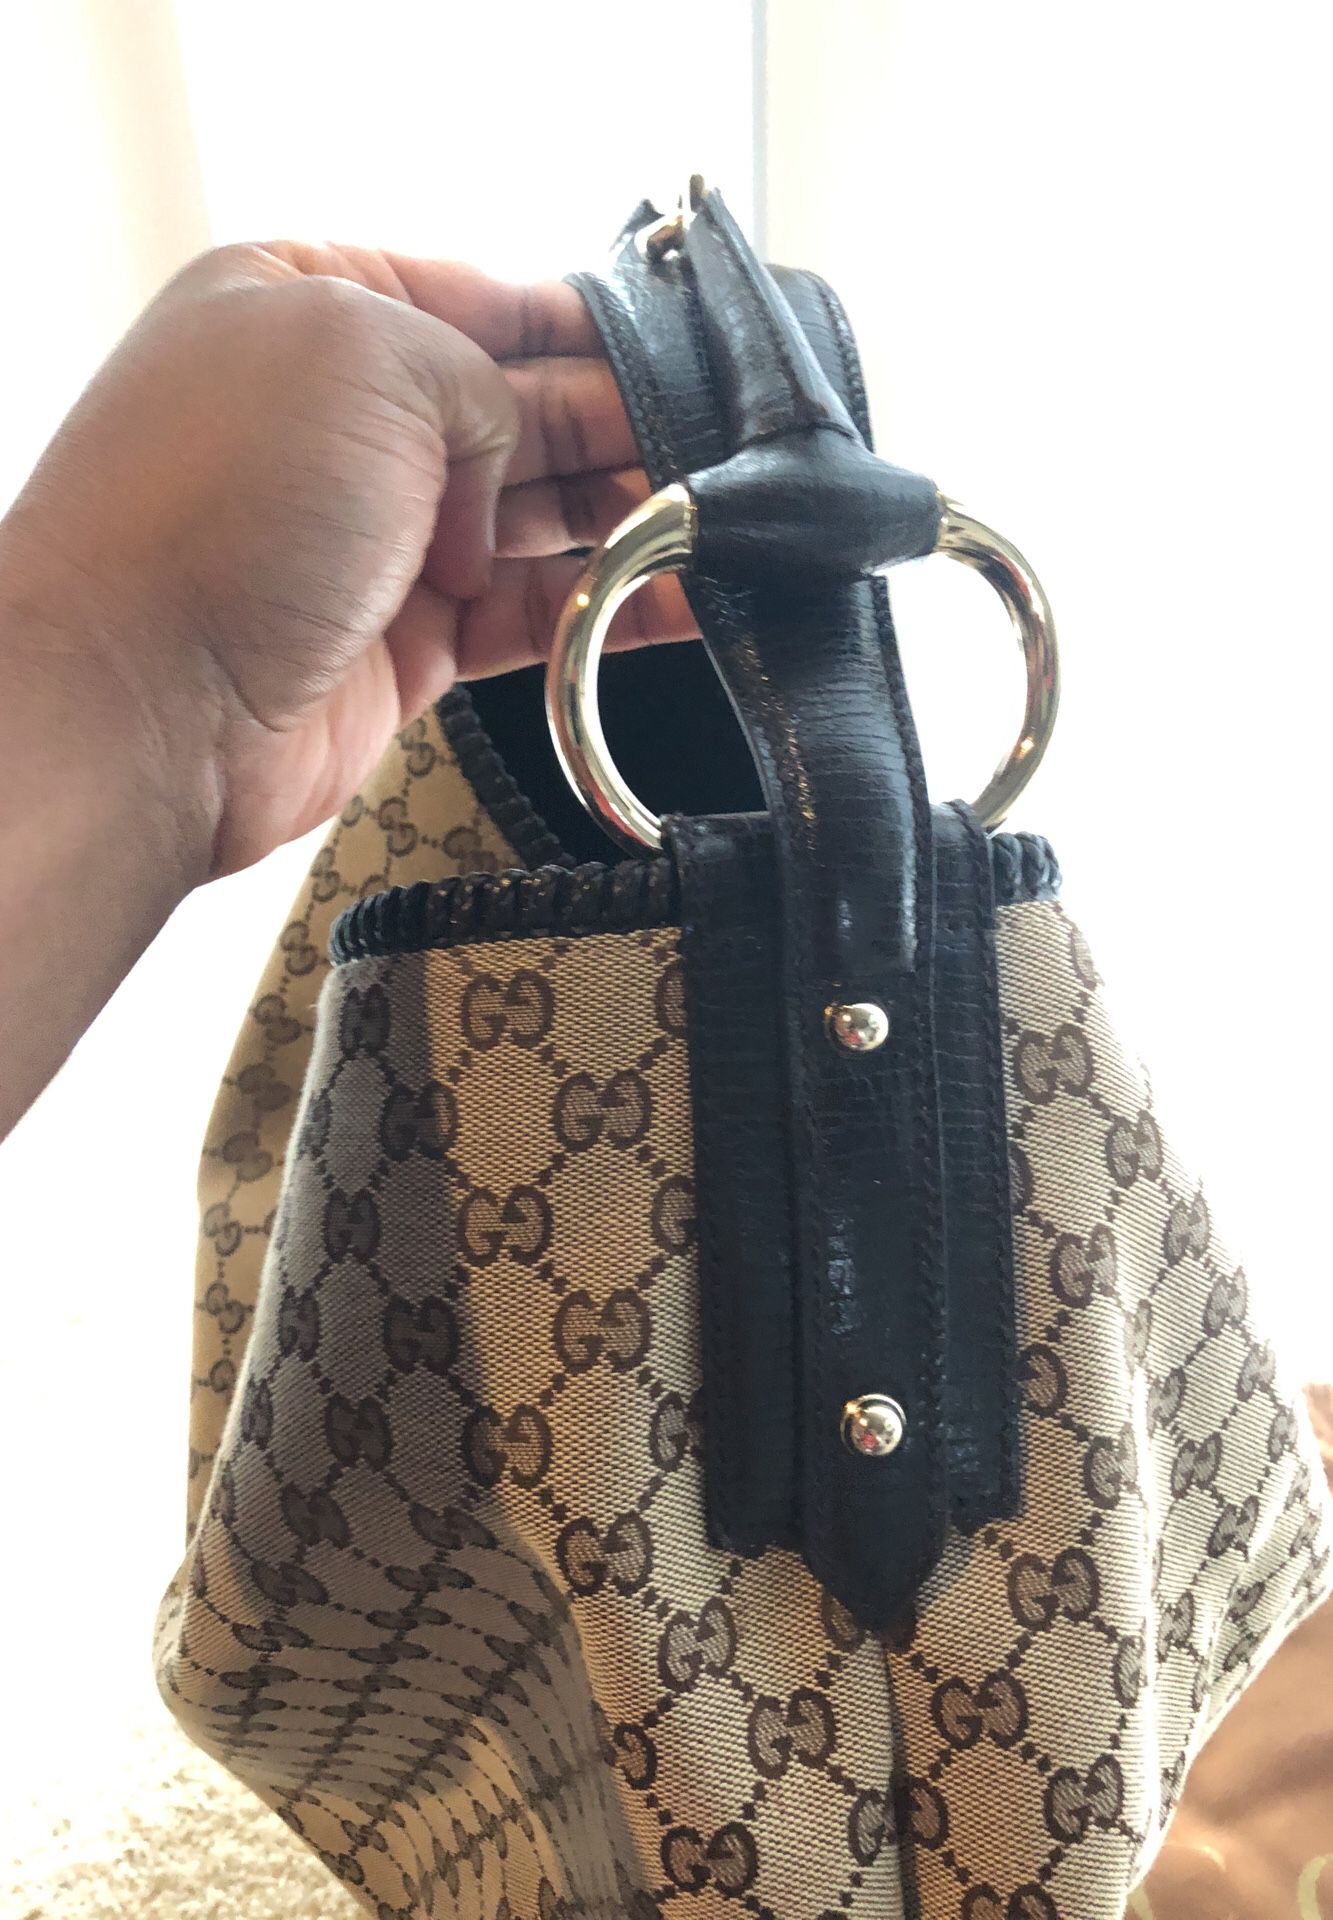 Vintage Gucci GG train case handbag for Sale in Arlington, TX - OfferUp